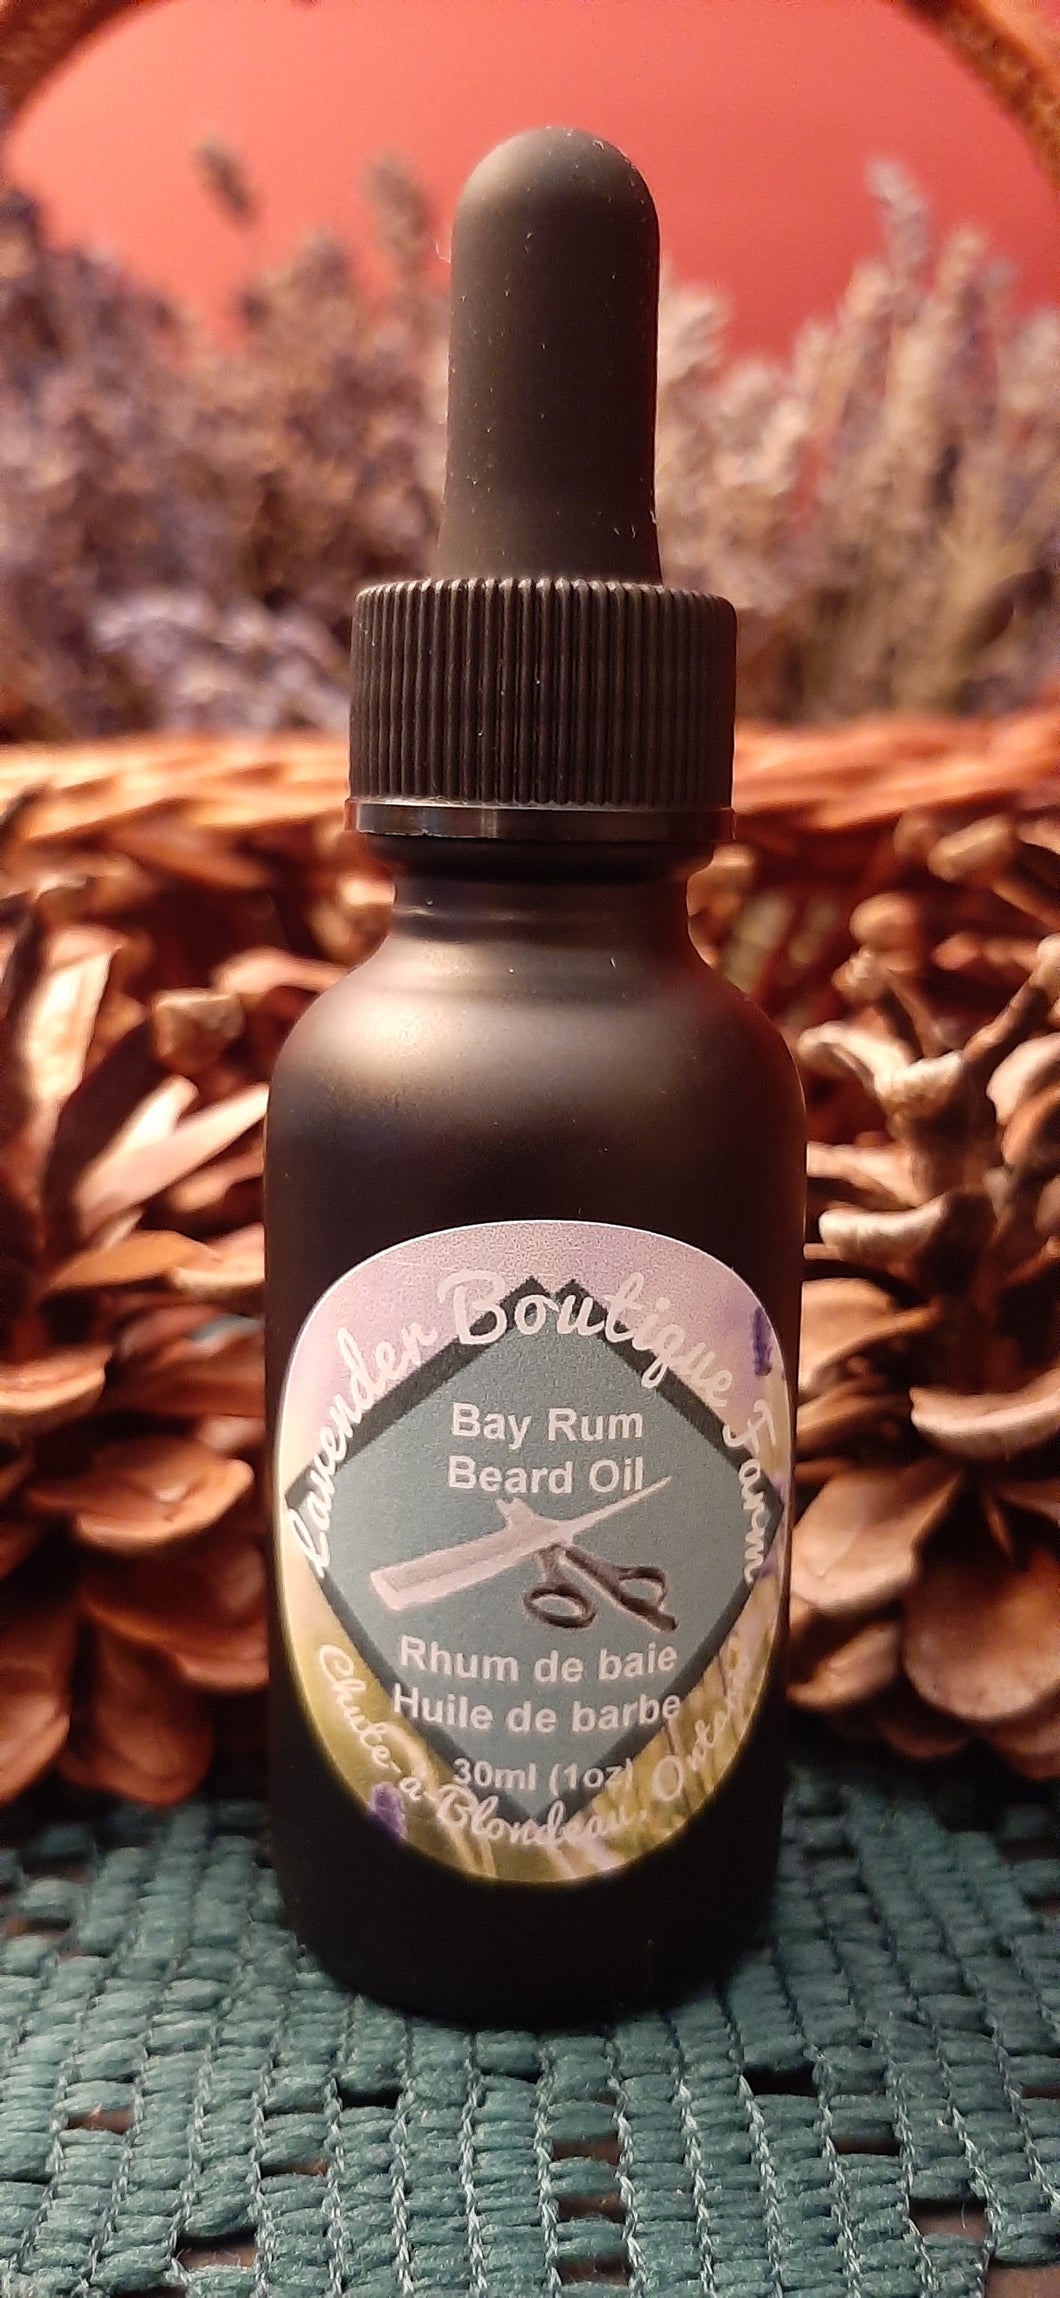 Bay Rum beard oil